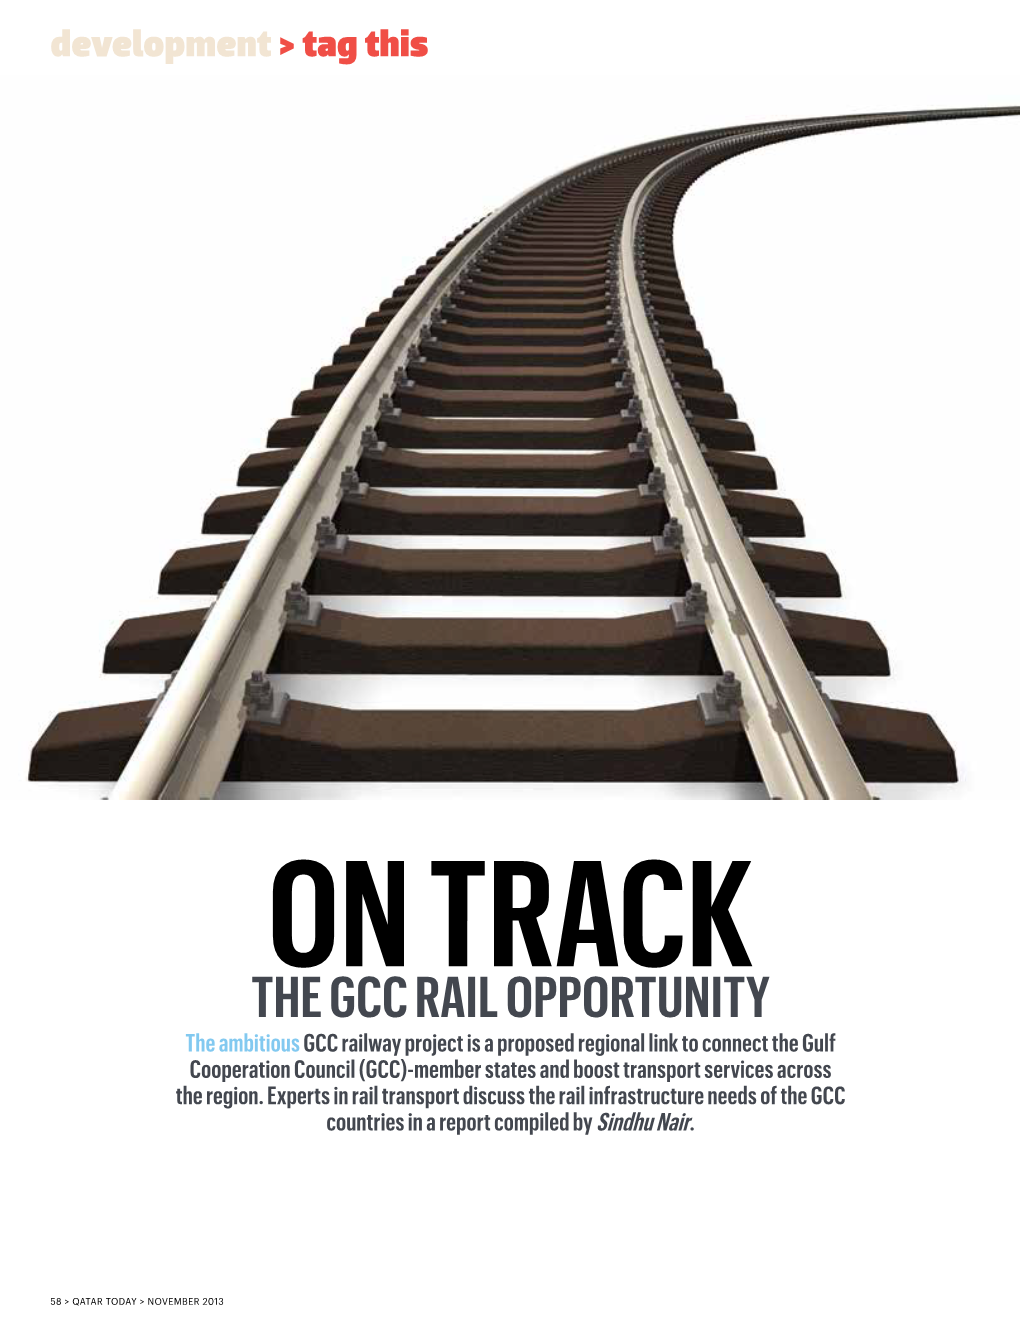 The Gcc Rail Opportunity